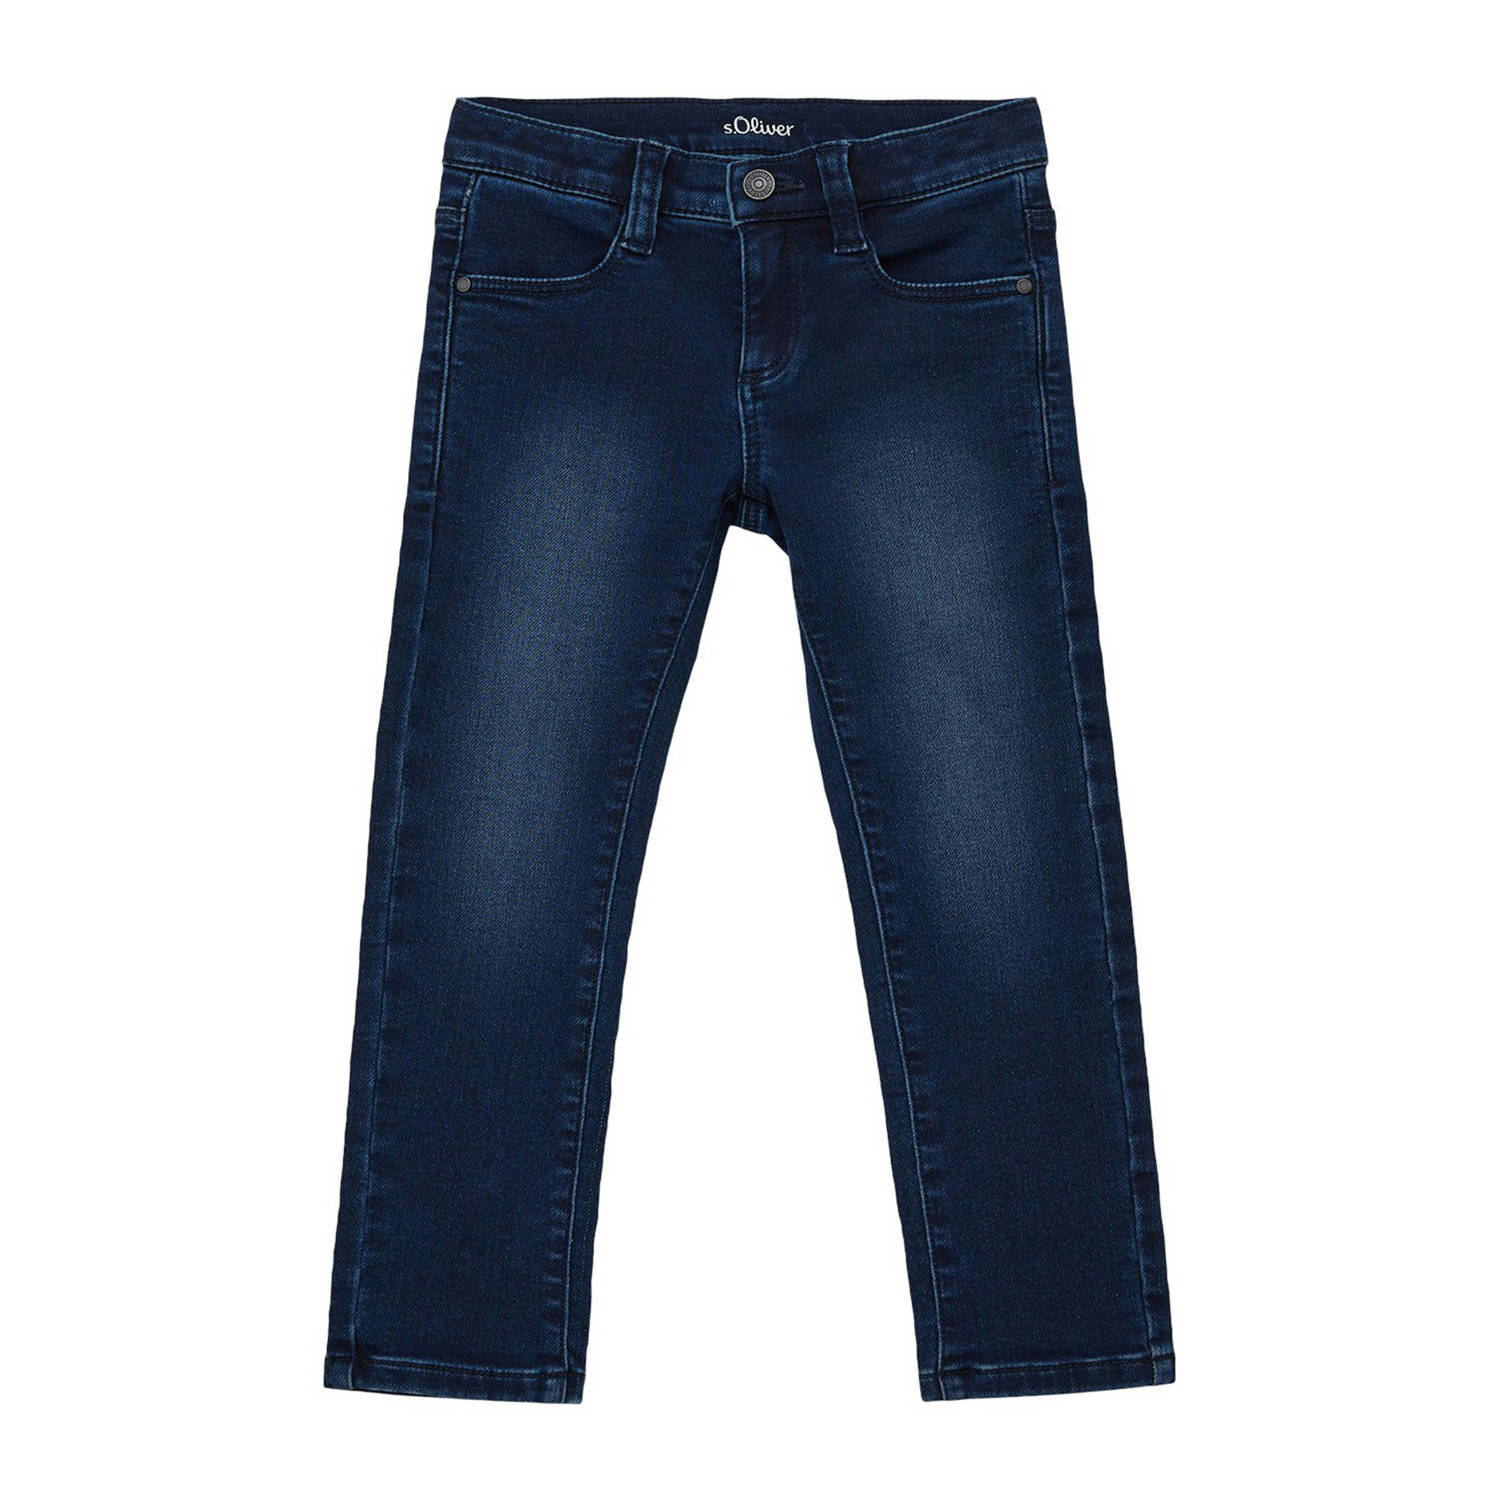 s.Oliver slim fit jeans dark blue denim